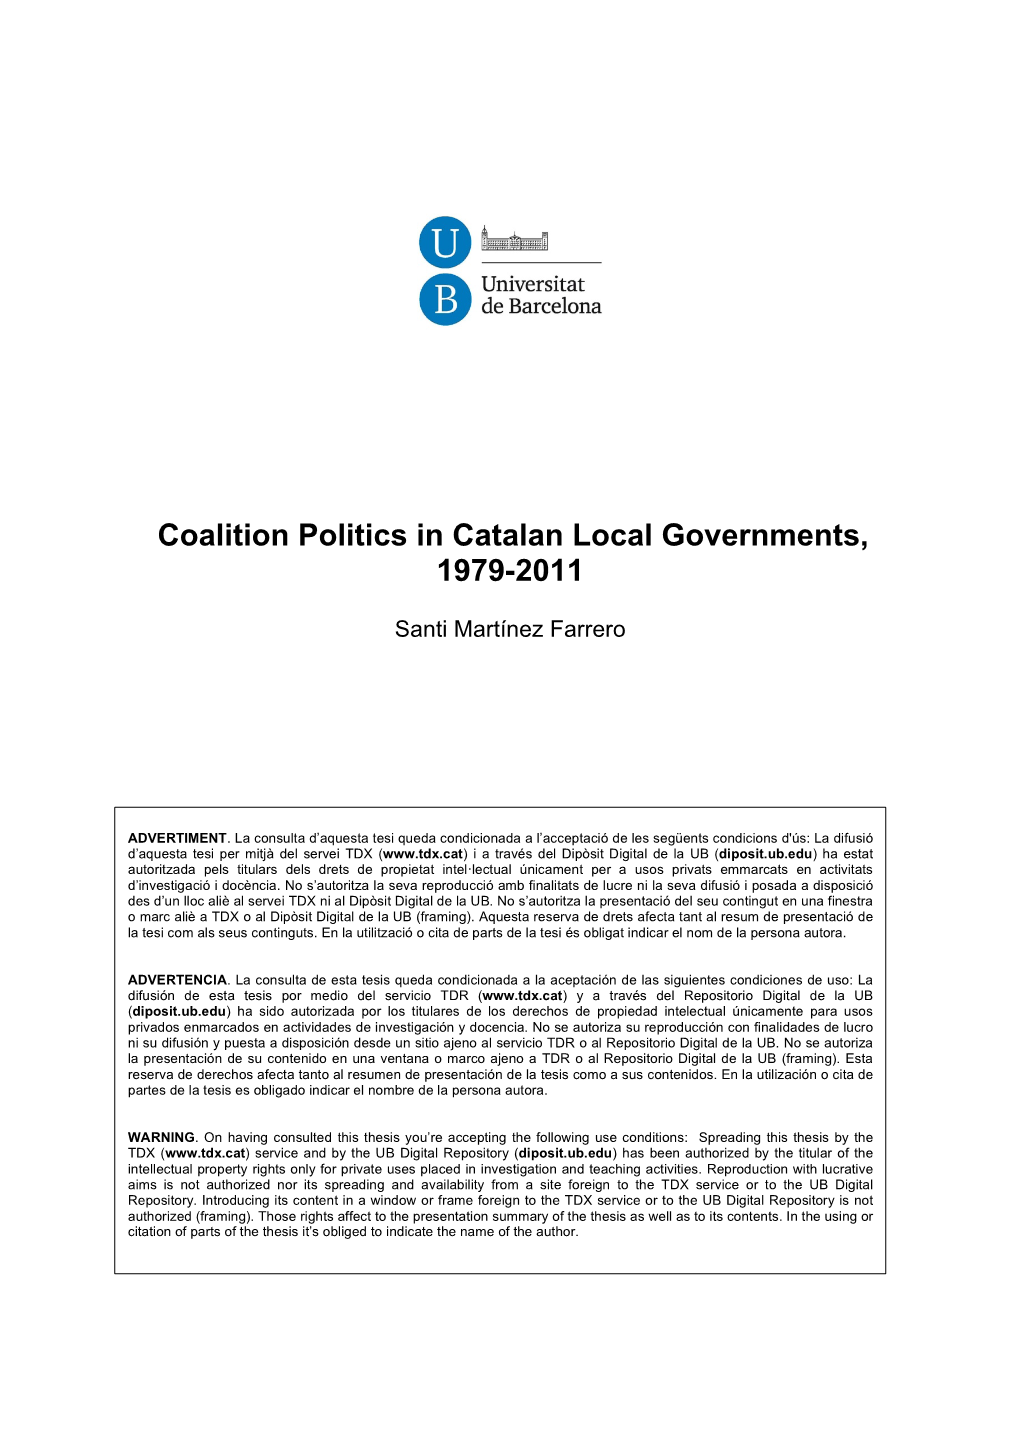 Coalition Politics in Catalan Local Governments, 1979-2011